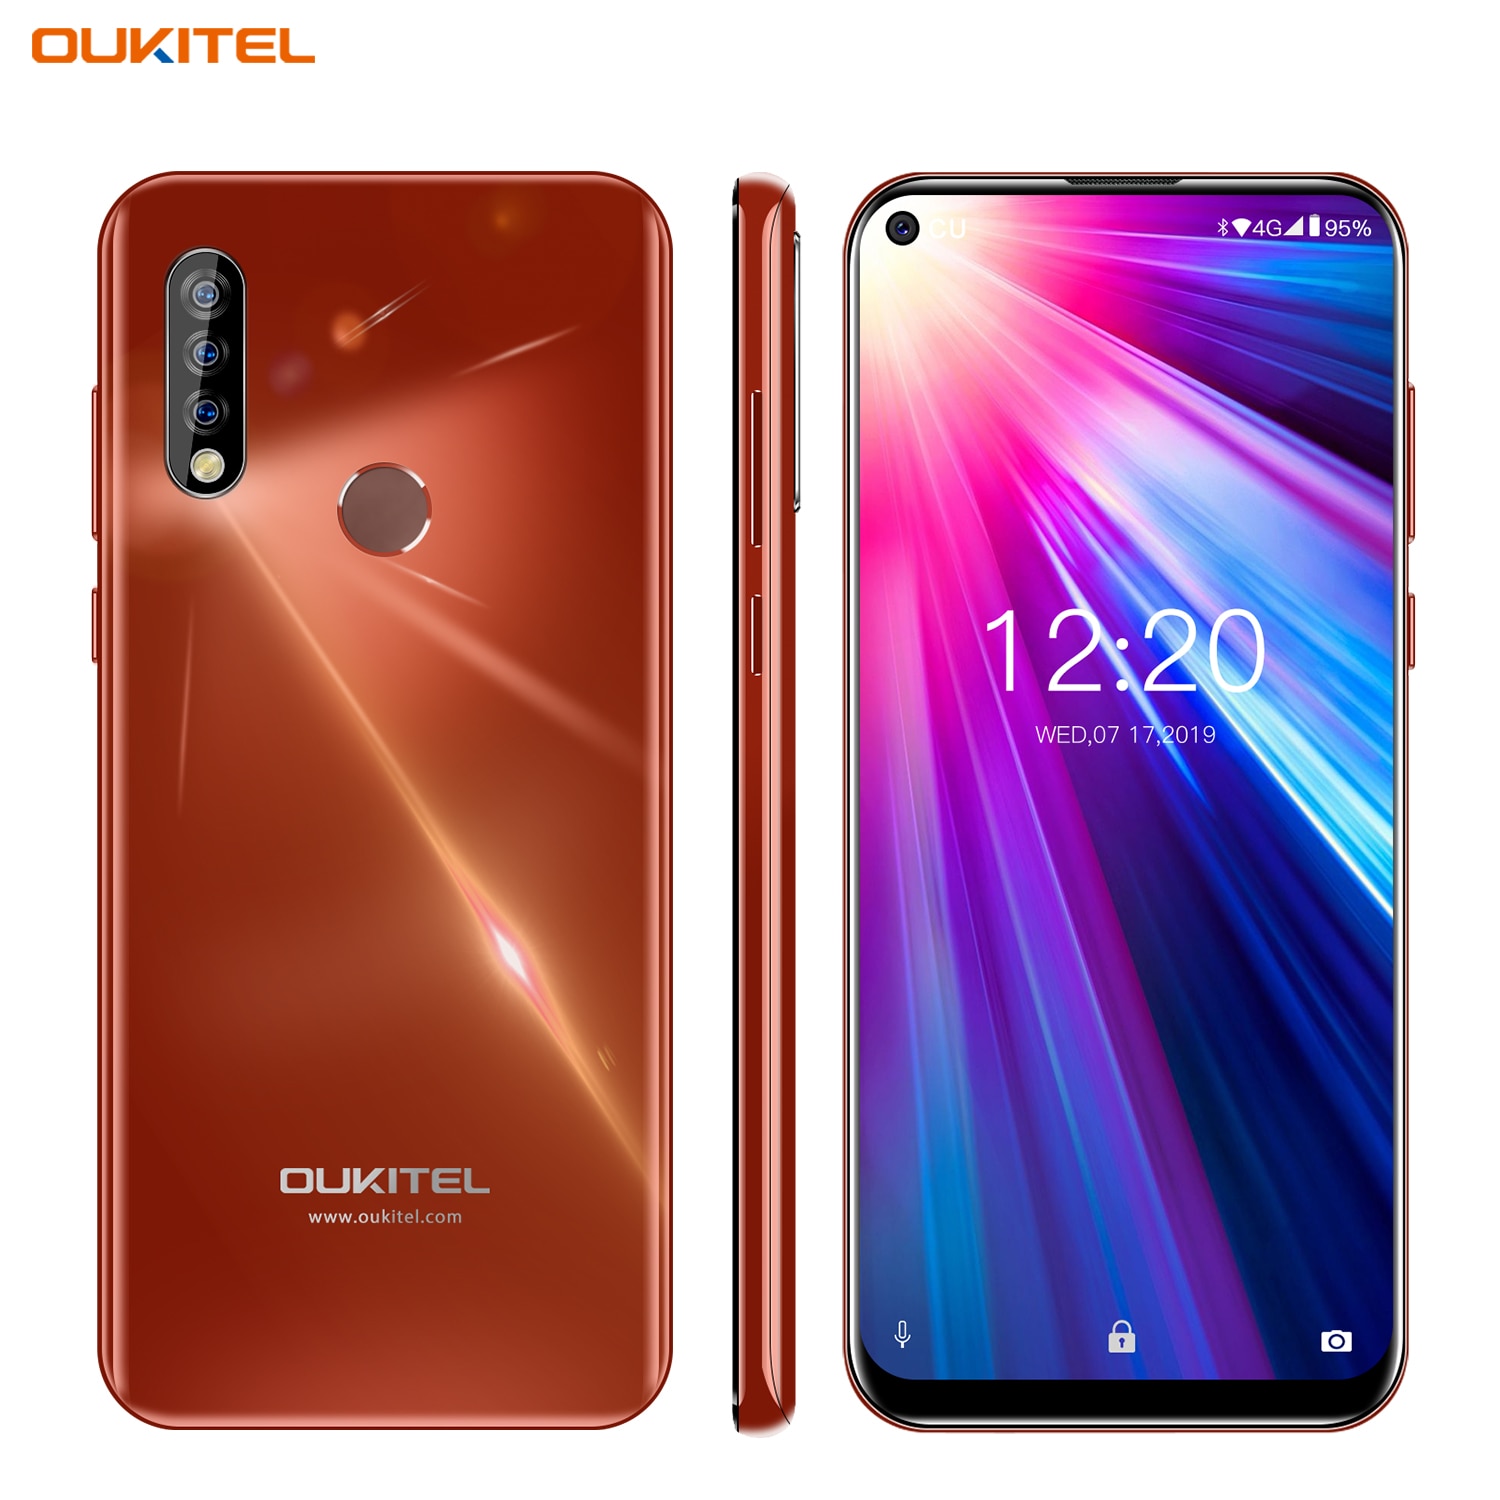 4G Mobile Phone OUKITEL C17 Android 9.0 Smartphone 6.35'' Face ID Fingerprint Octa Core 3GB 16GB 3900mAh Triple Camera MT6763